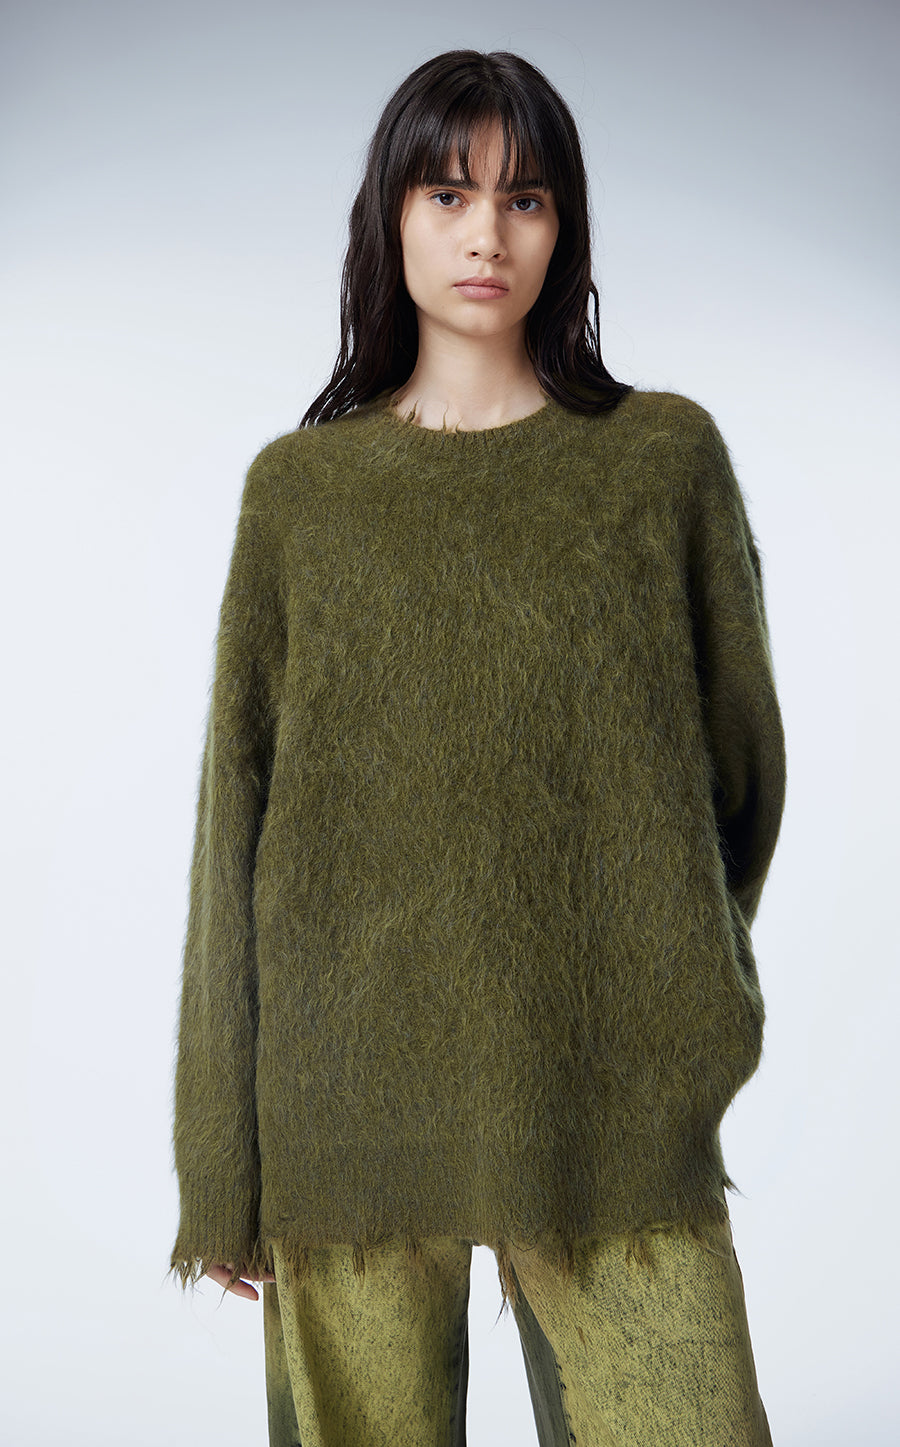 Sweater / JNBY Oversize Alpaca Wool Sweater